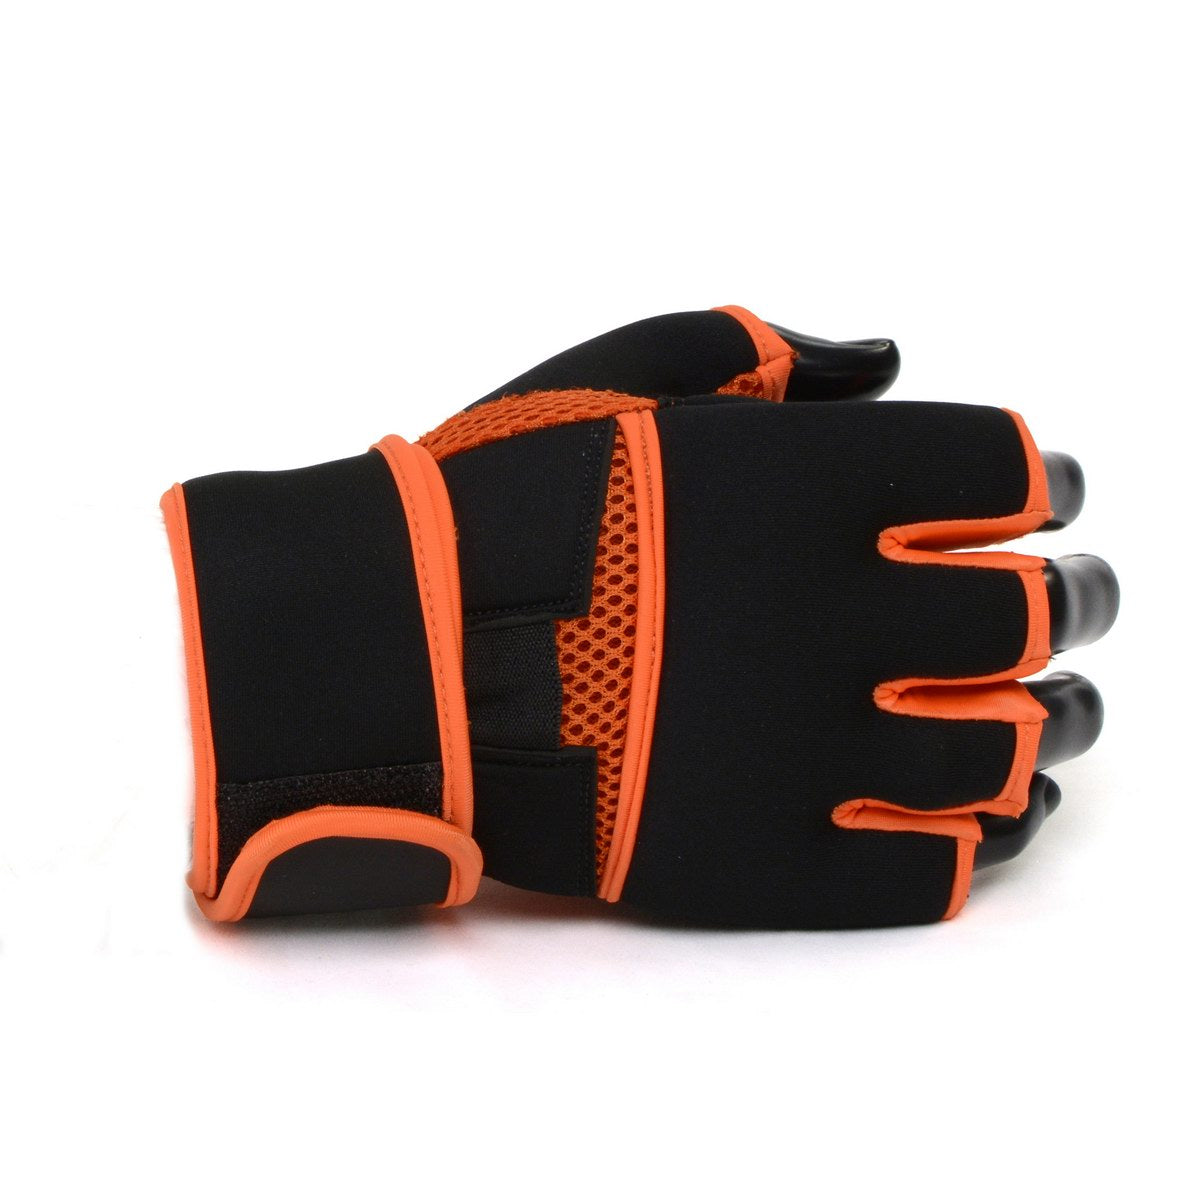 X-Fitness XF3000 Gel Boxing MMA Kickboxing Cross Training Handwrap Gloves-BLK/ORANGE